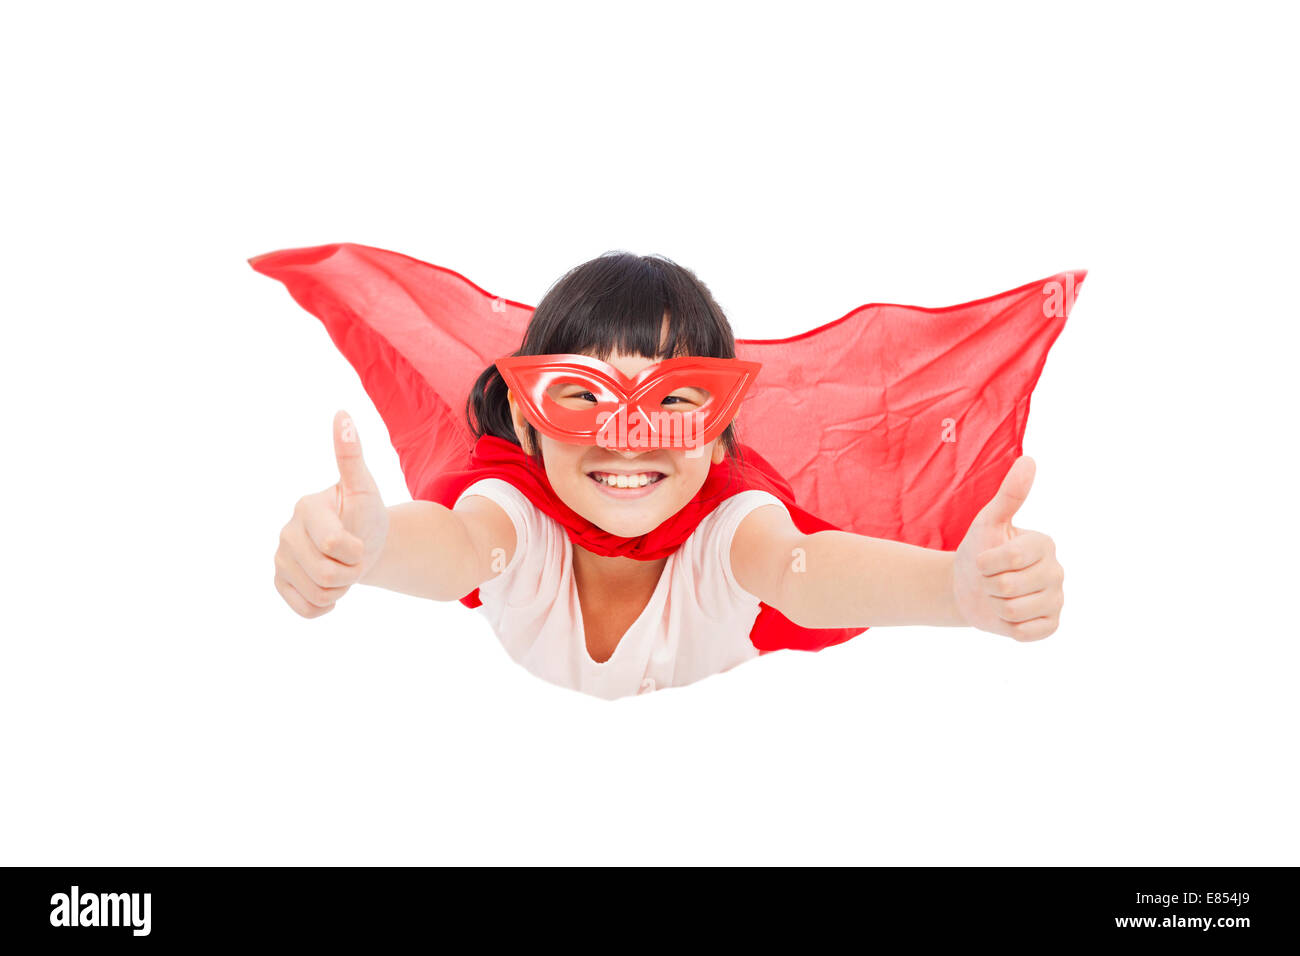 superhero kid flying and thumb up. isolated on white background Stock Photo